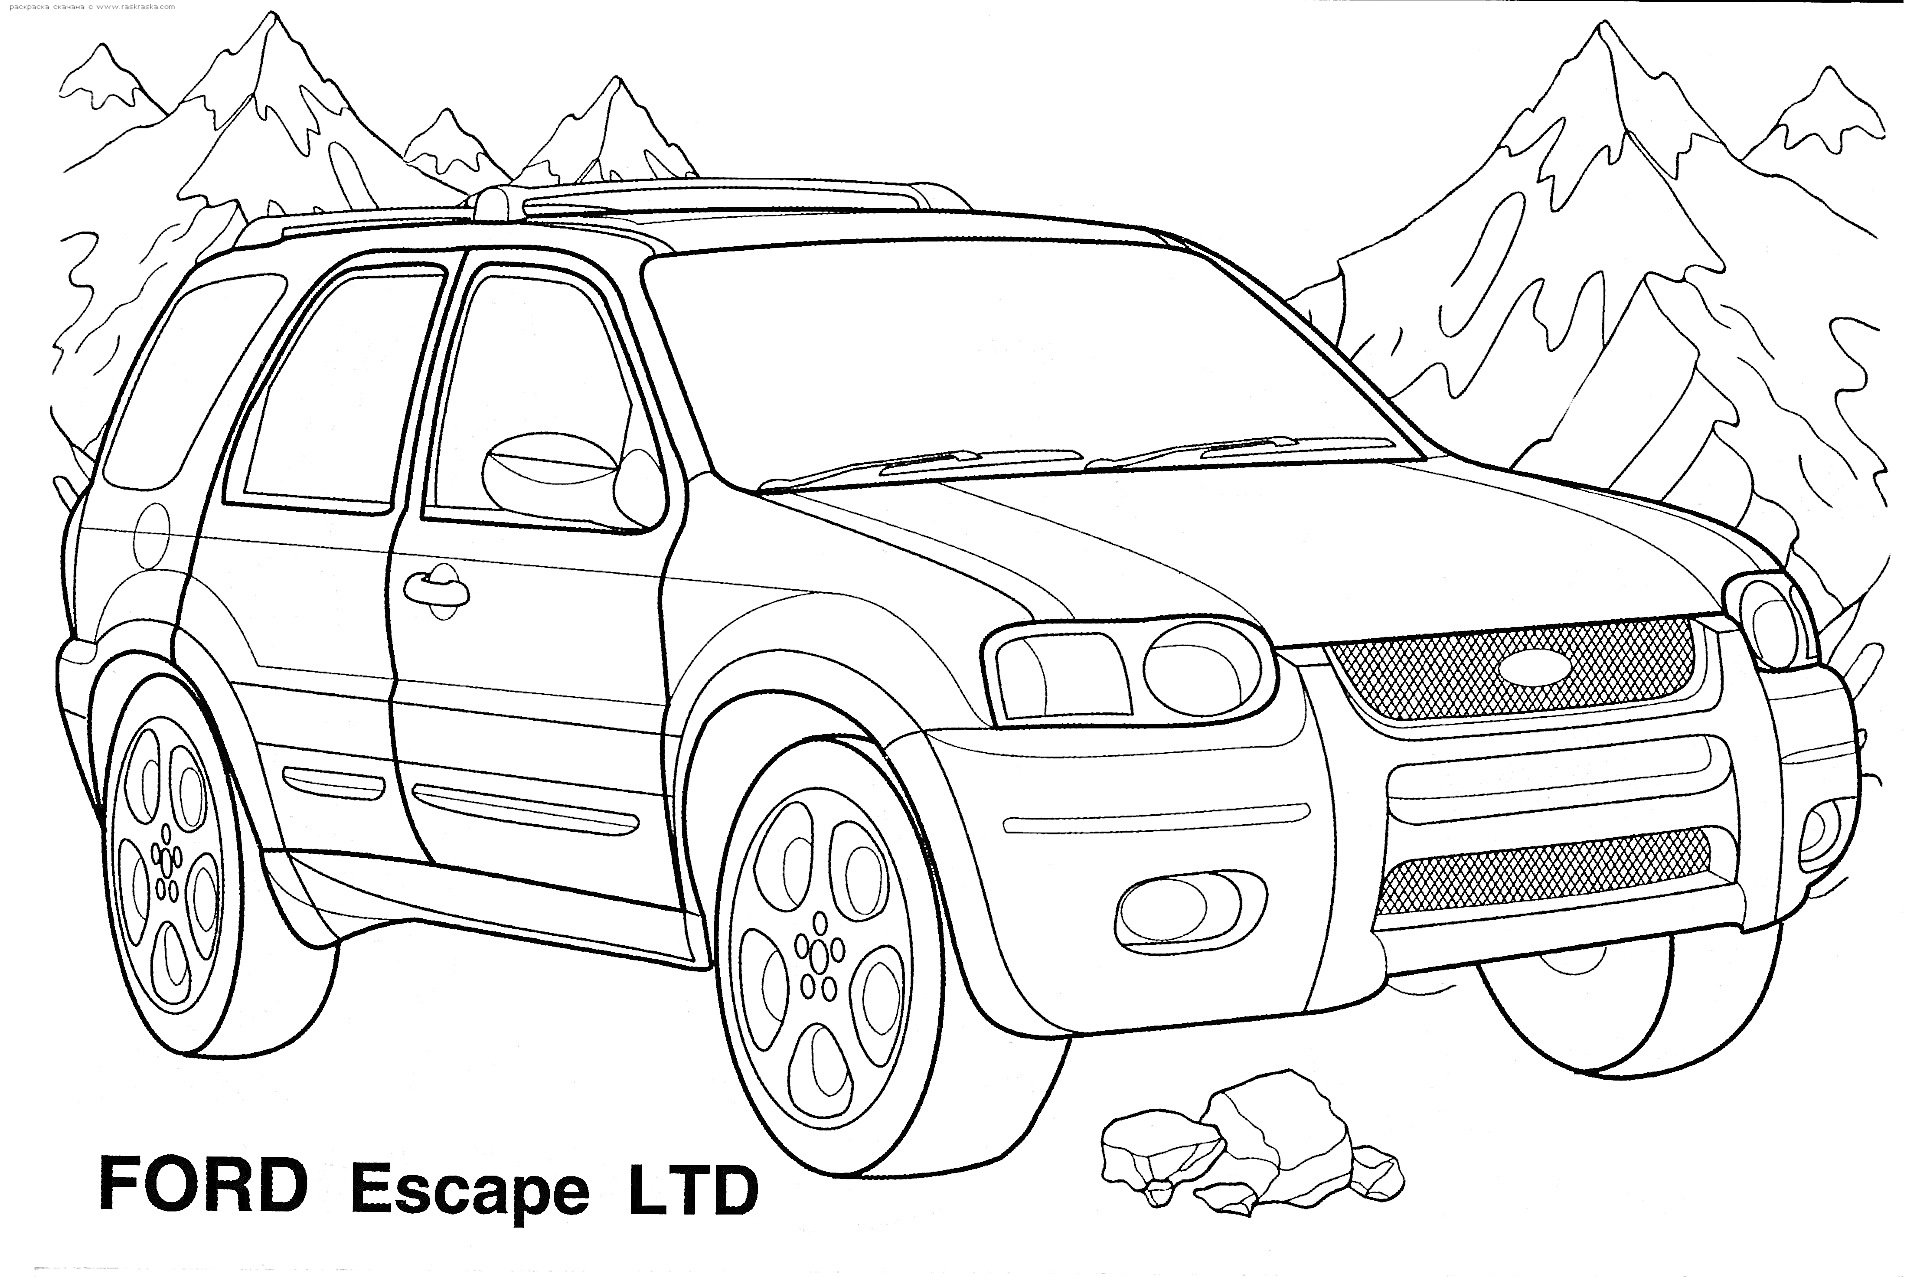 Раскраска Автомобиль Ford Escape LTD на фоне гор